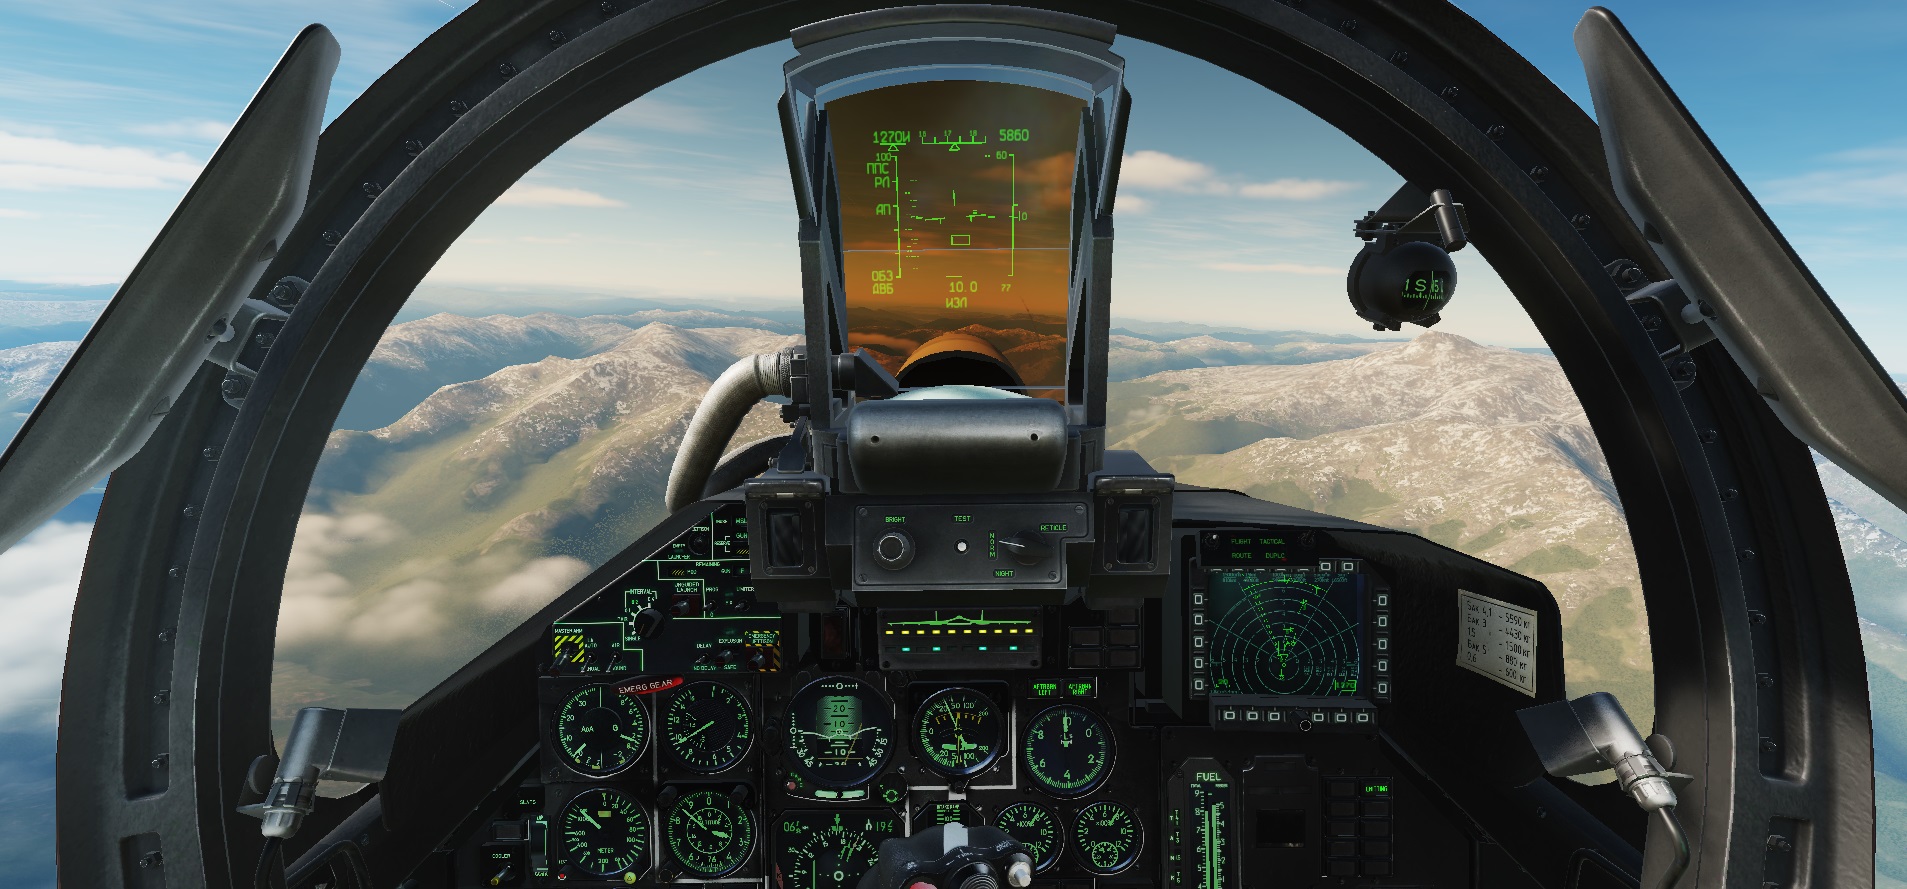 J-11B Aggressor Dark Cockpit HD Skin no mipmaps Data Link Upgrade (WIP) VERSION 4